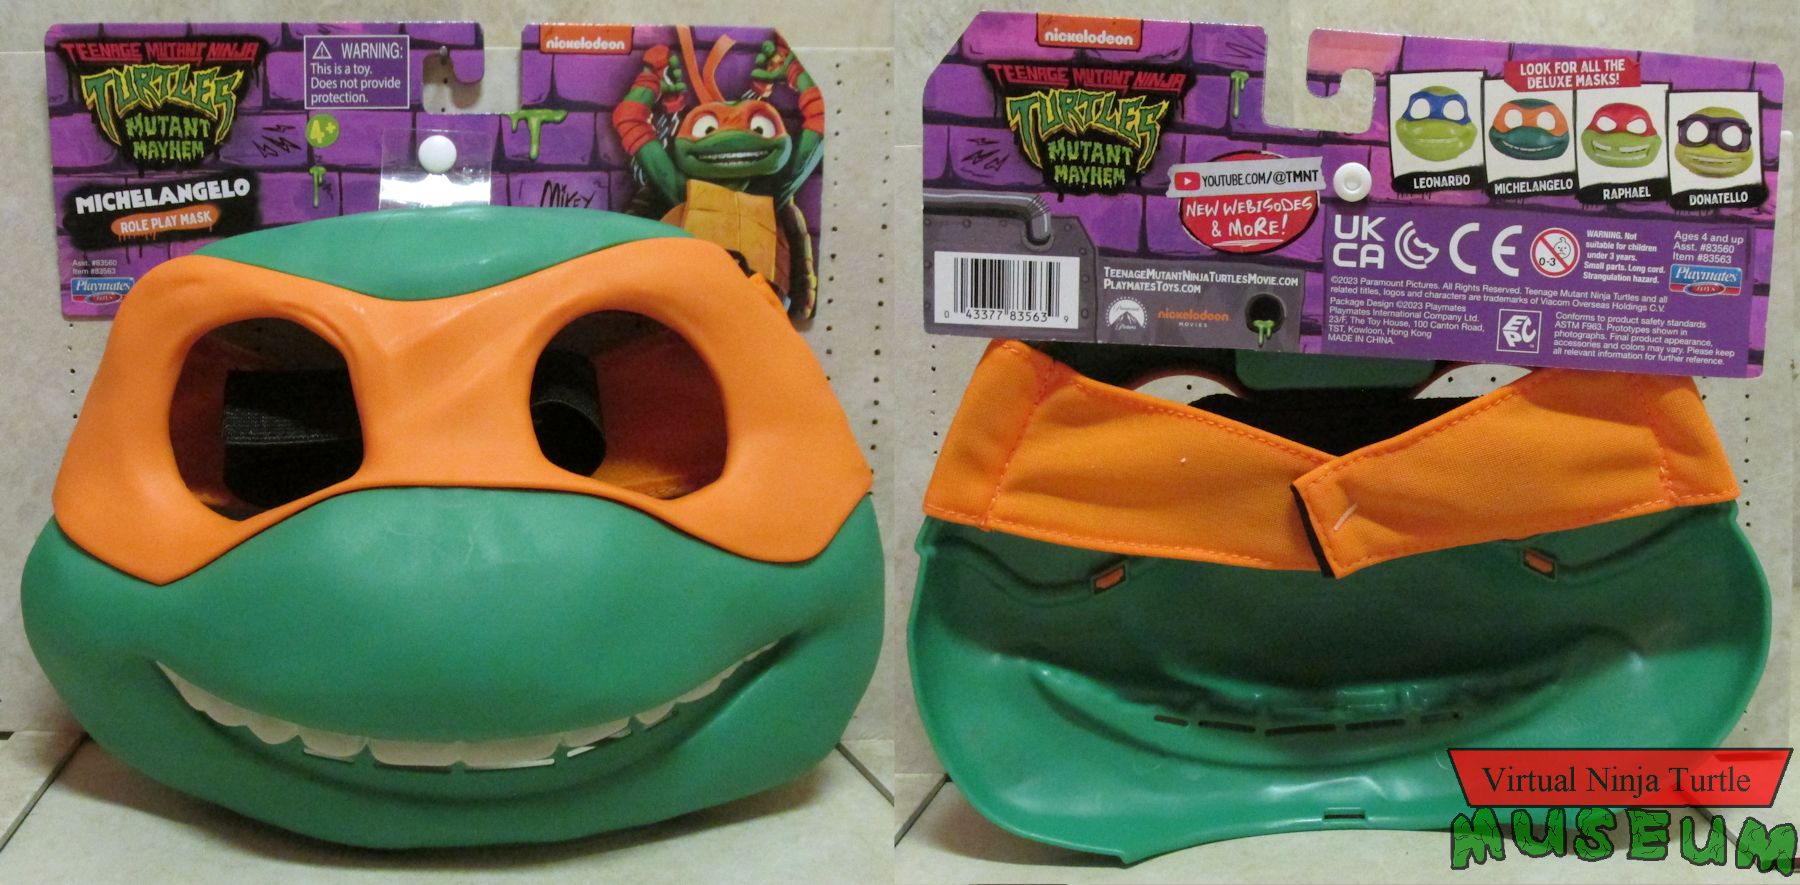 Michelangelo Mask front and back